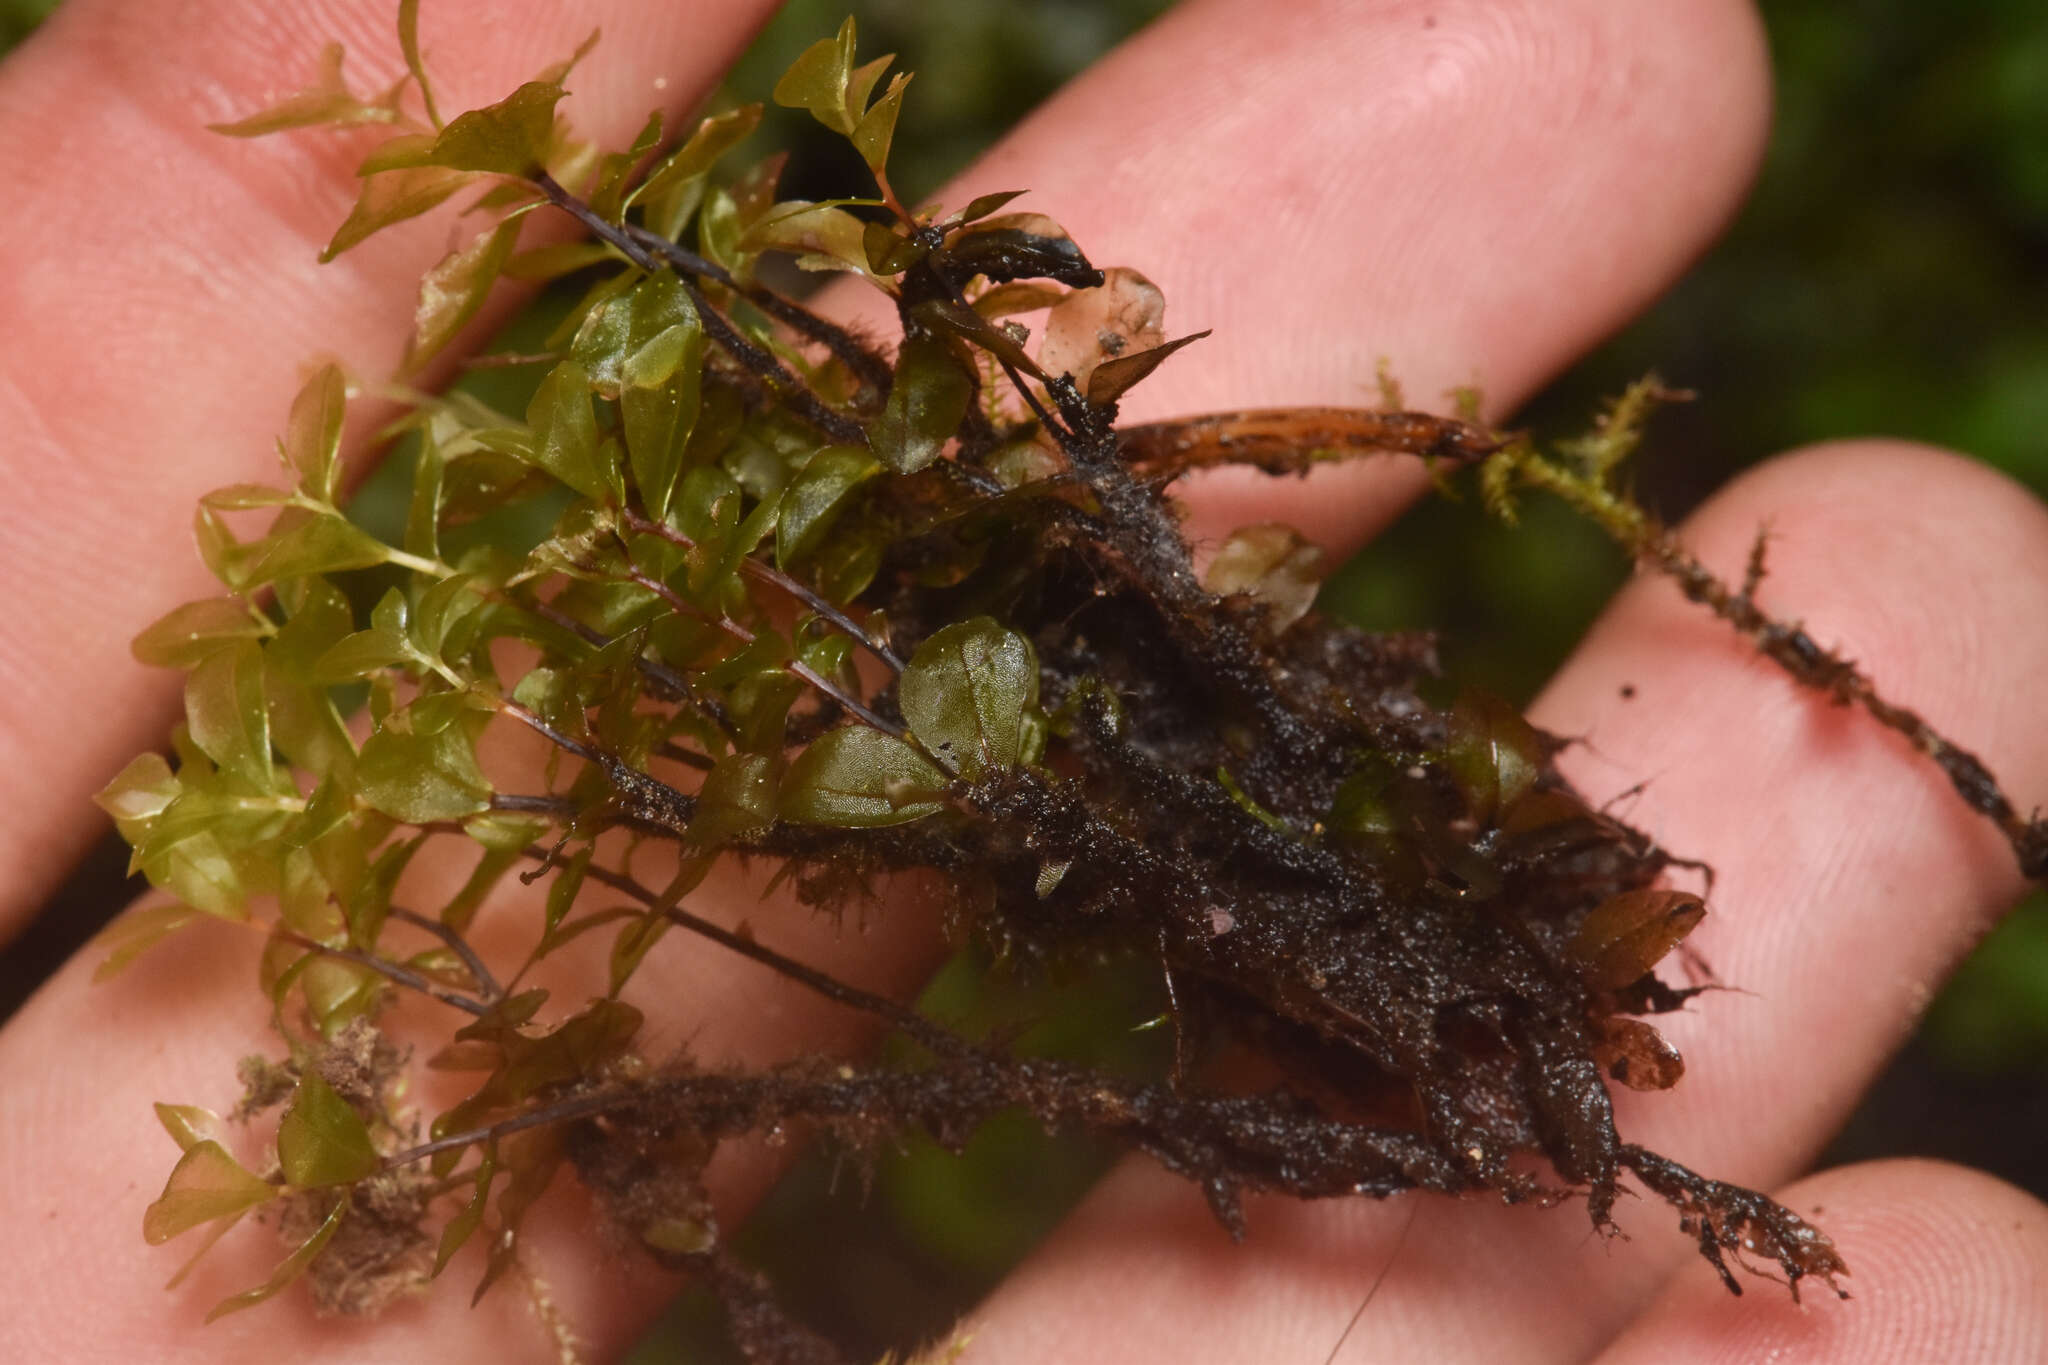 Image of grandleaf rhizomnium moss